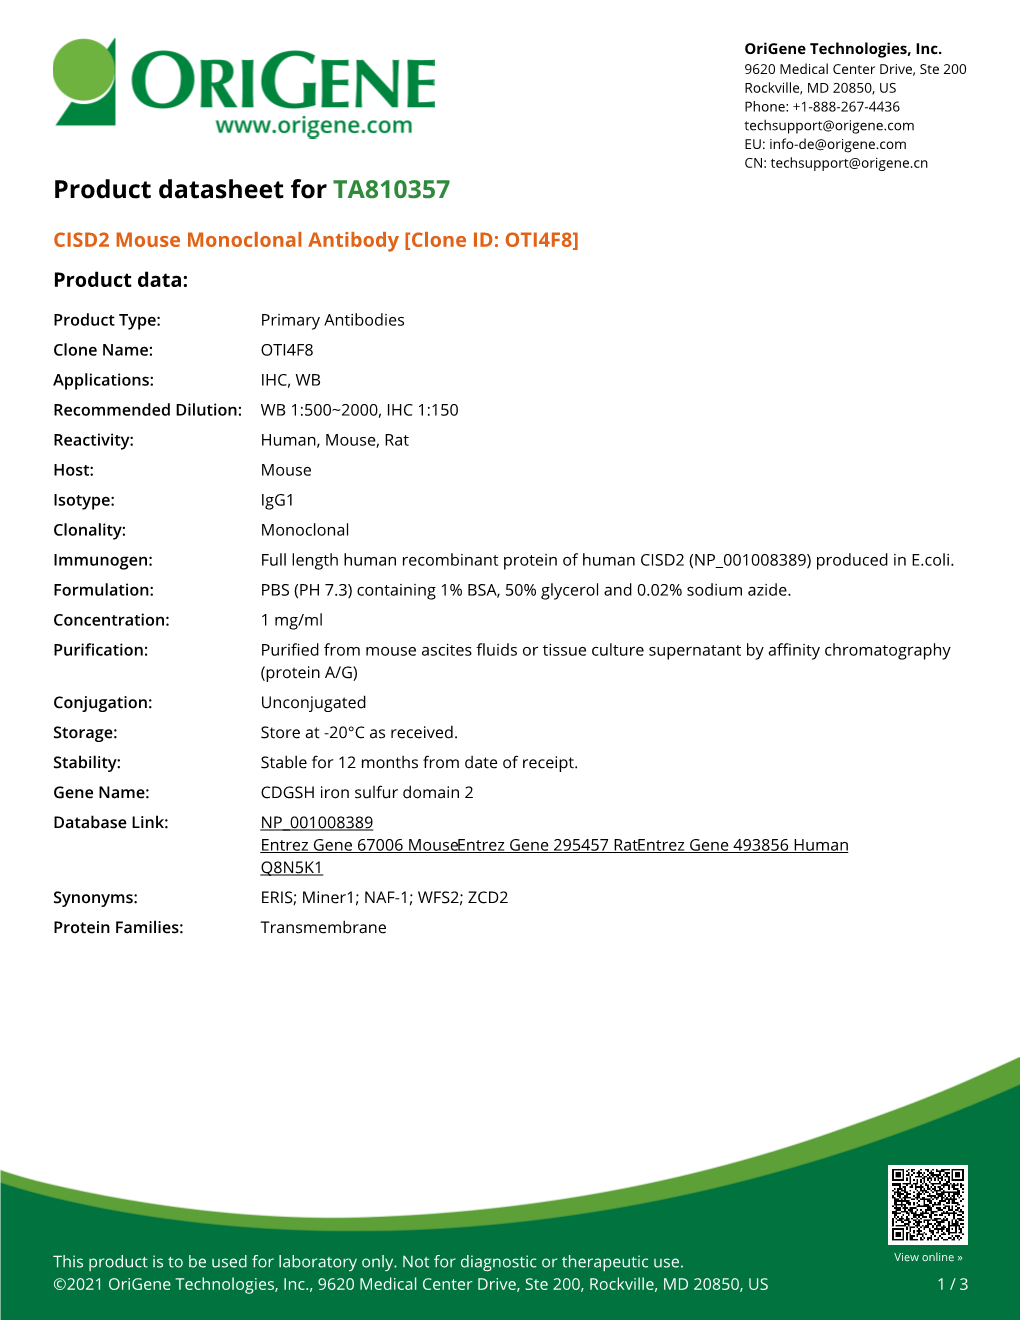 CISD2 Mouse Monoclonal Antibody [Clone ID: OTI4F8] Product Data